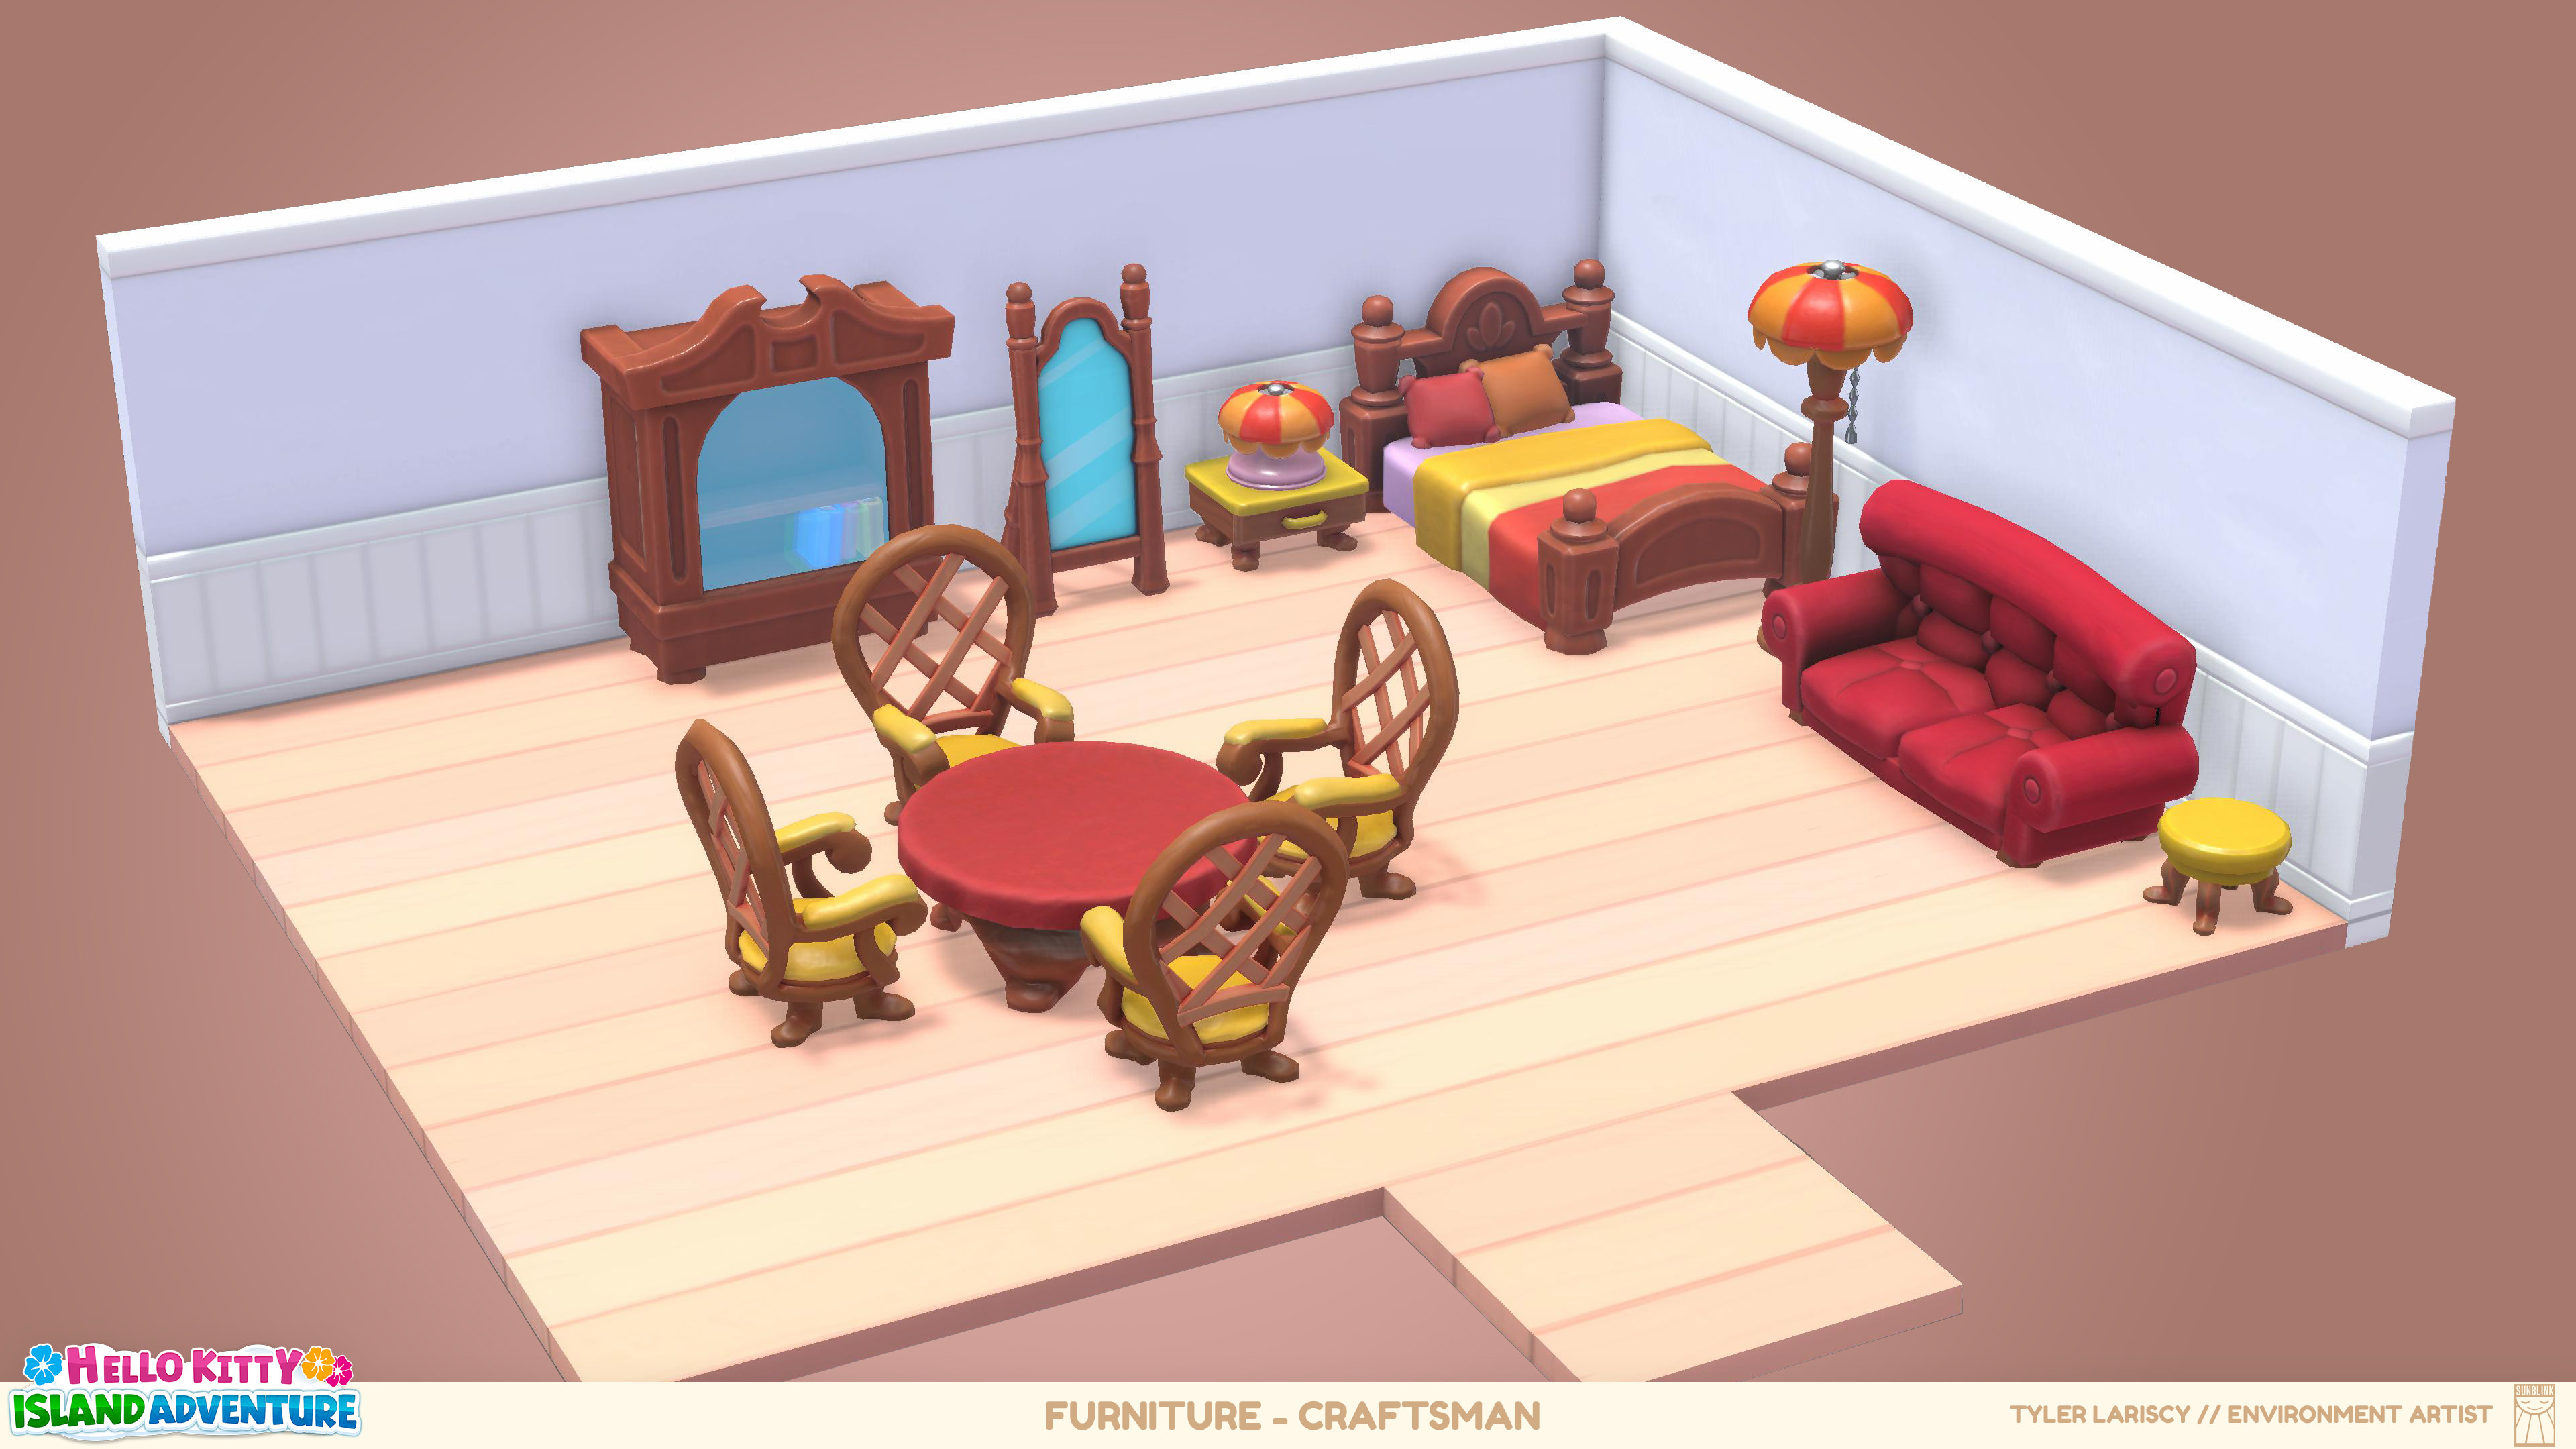 A craftsman themed furniture set.